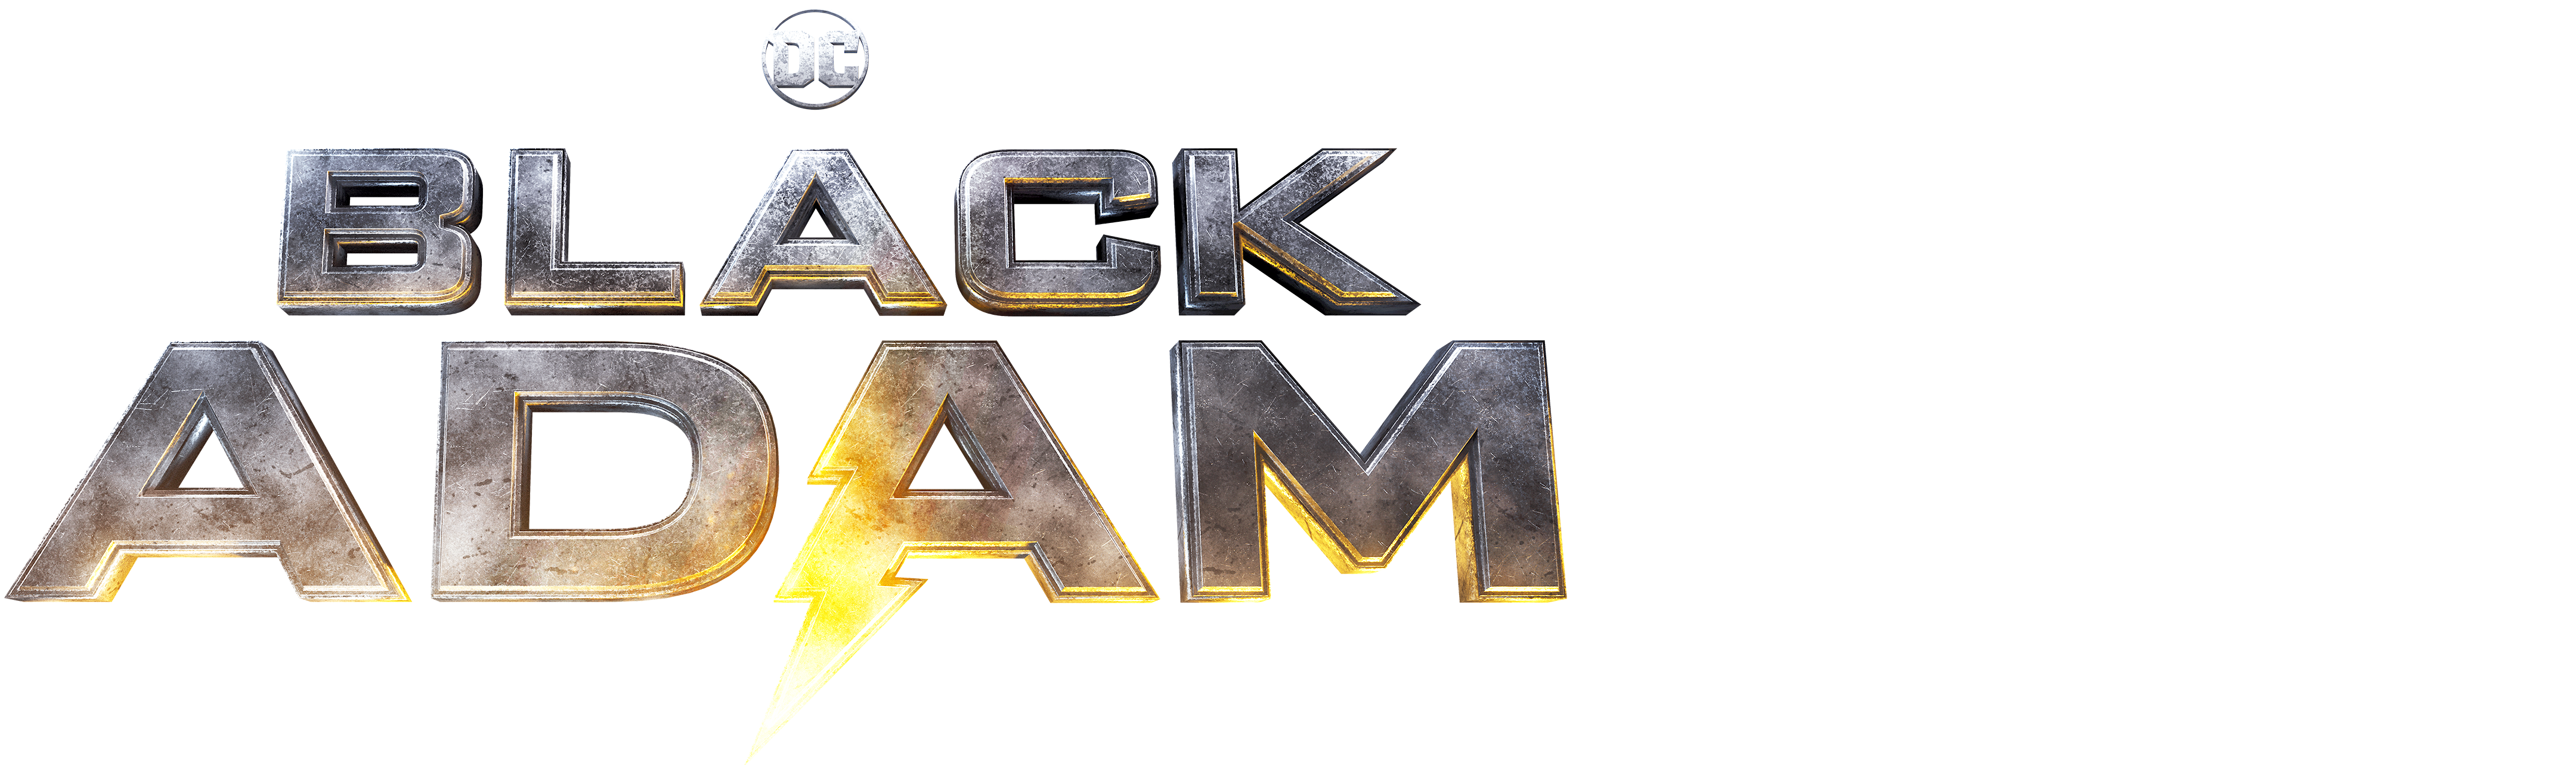 Watch Black Adam (HBO)